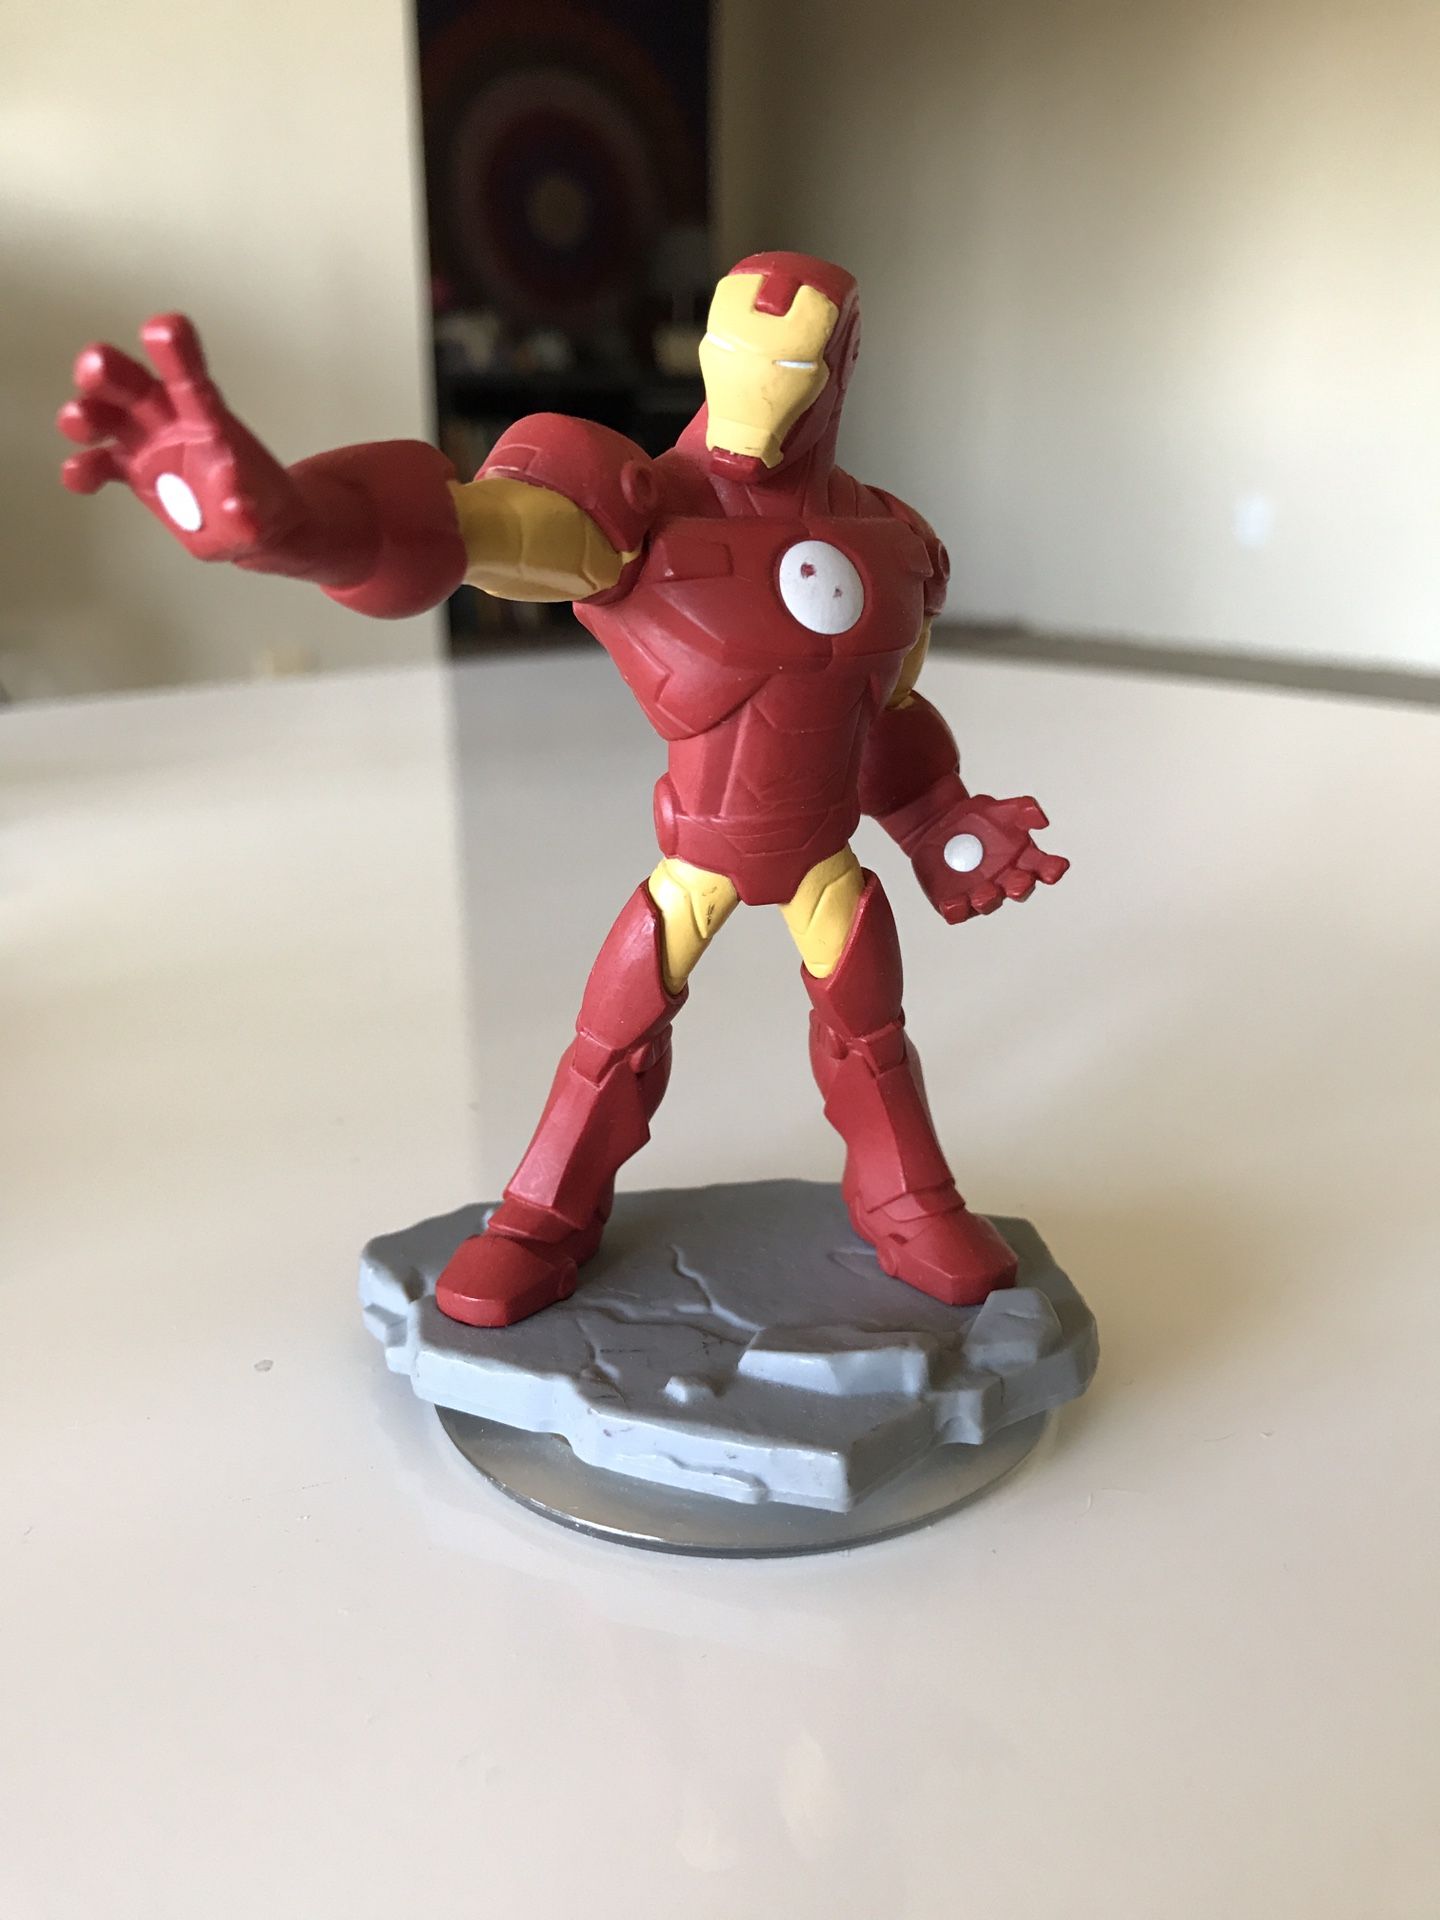 Disney Infinity 2.0, Marvel’s Iron Man